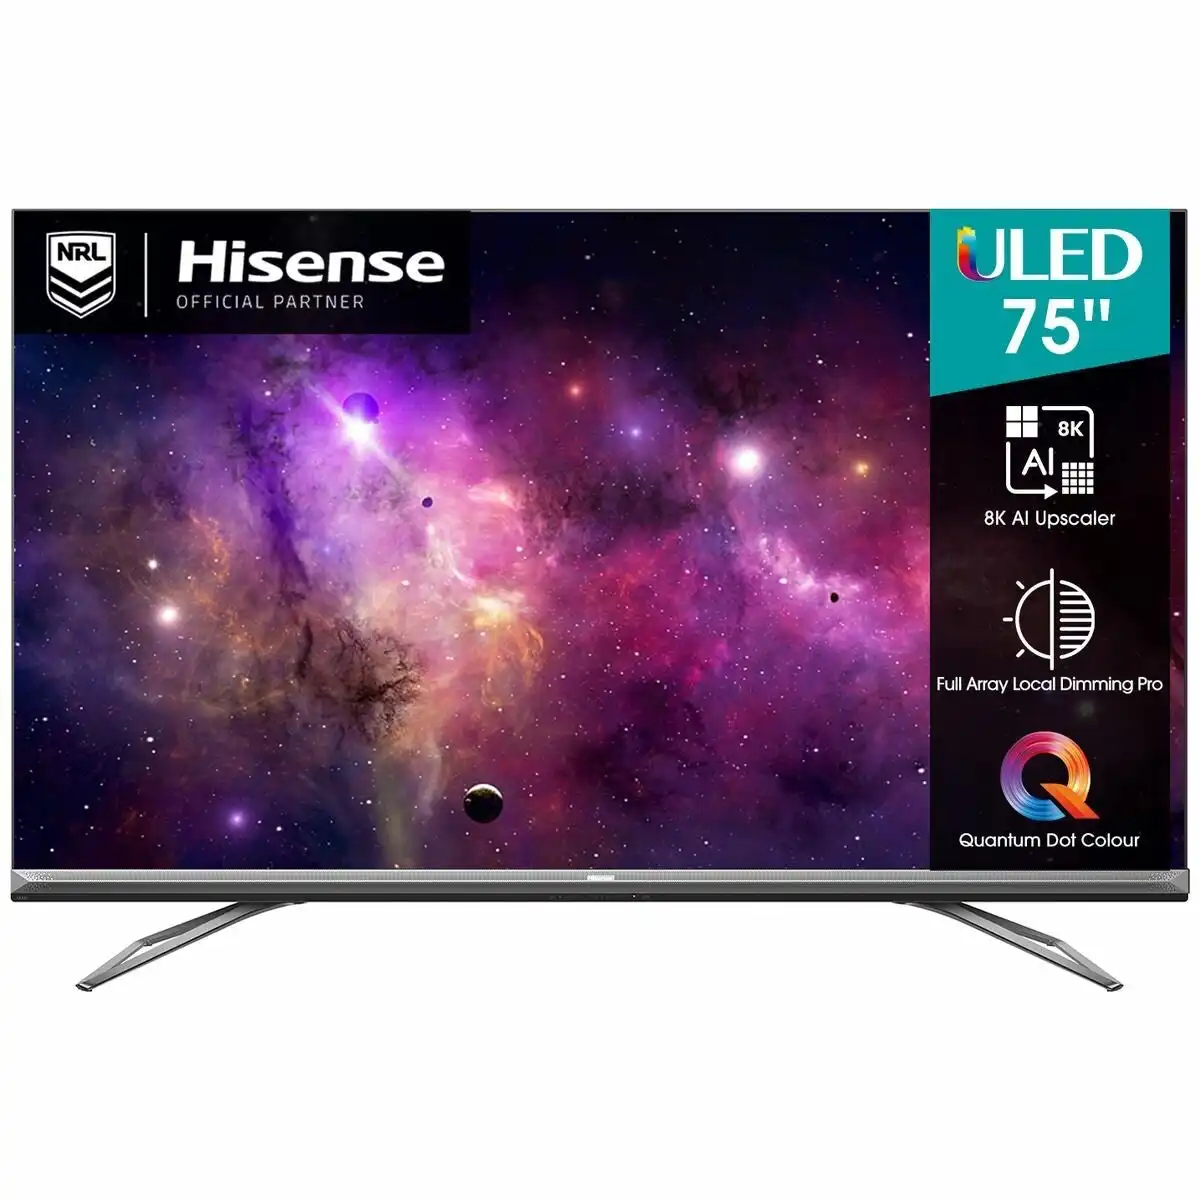 Hisense 75 Inch U80G 8K UHD HDR Smart ULED TV